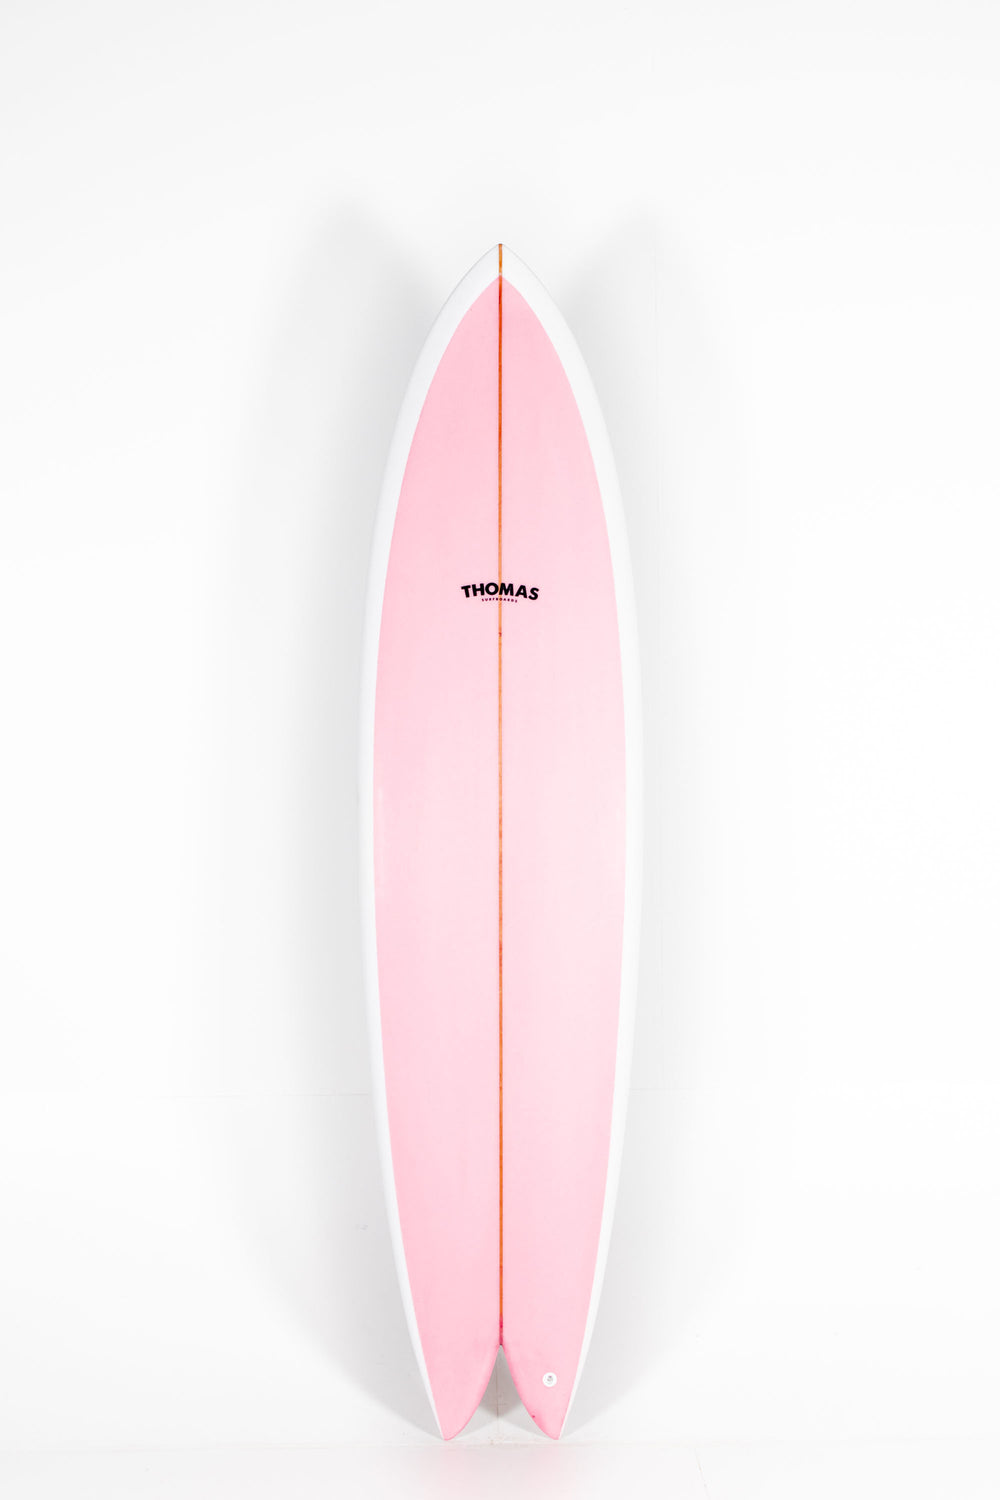 Pukas Surf Shop - Thomas Surfboards - LONG FISH - 7'6